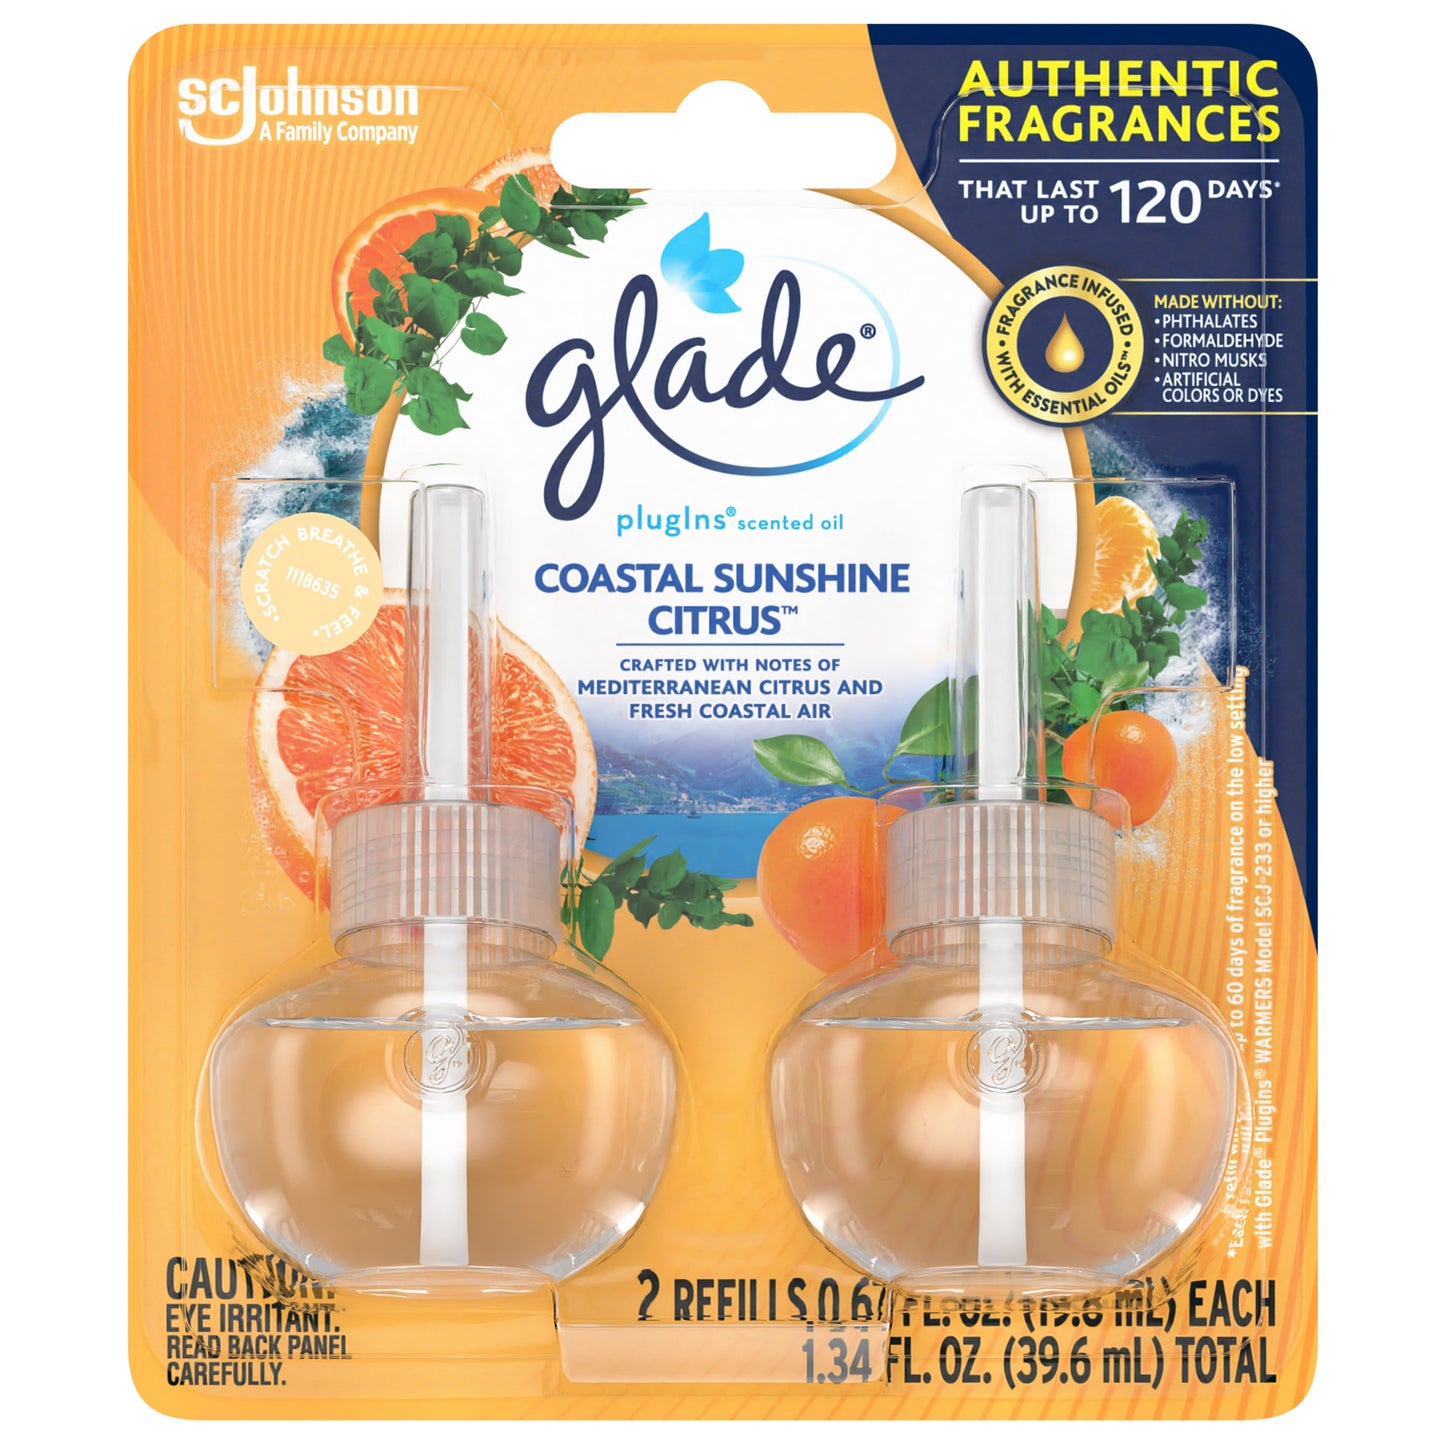 Glade PlugIns Scented Oil 2 Refills, Glade Plug in refills, Air Freshener, Coastal Sunshine Citrus™, 2 x 0.67 oz